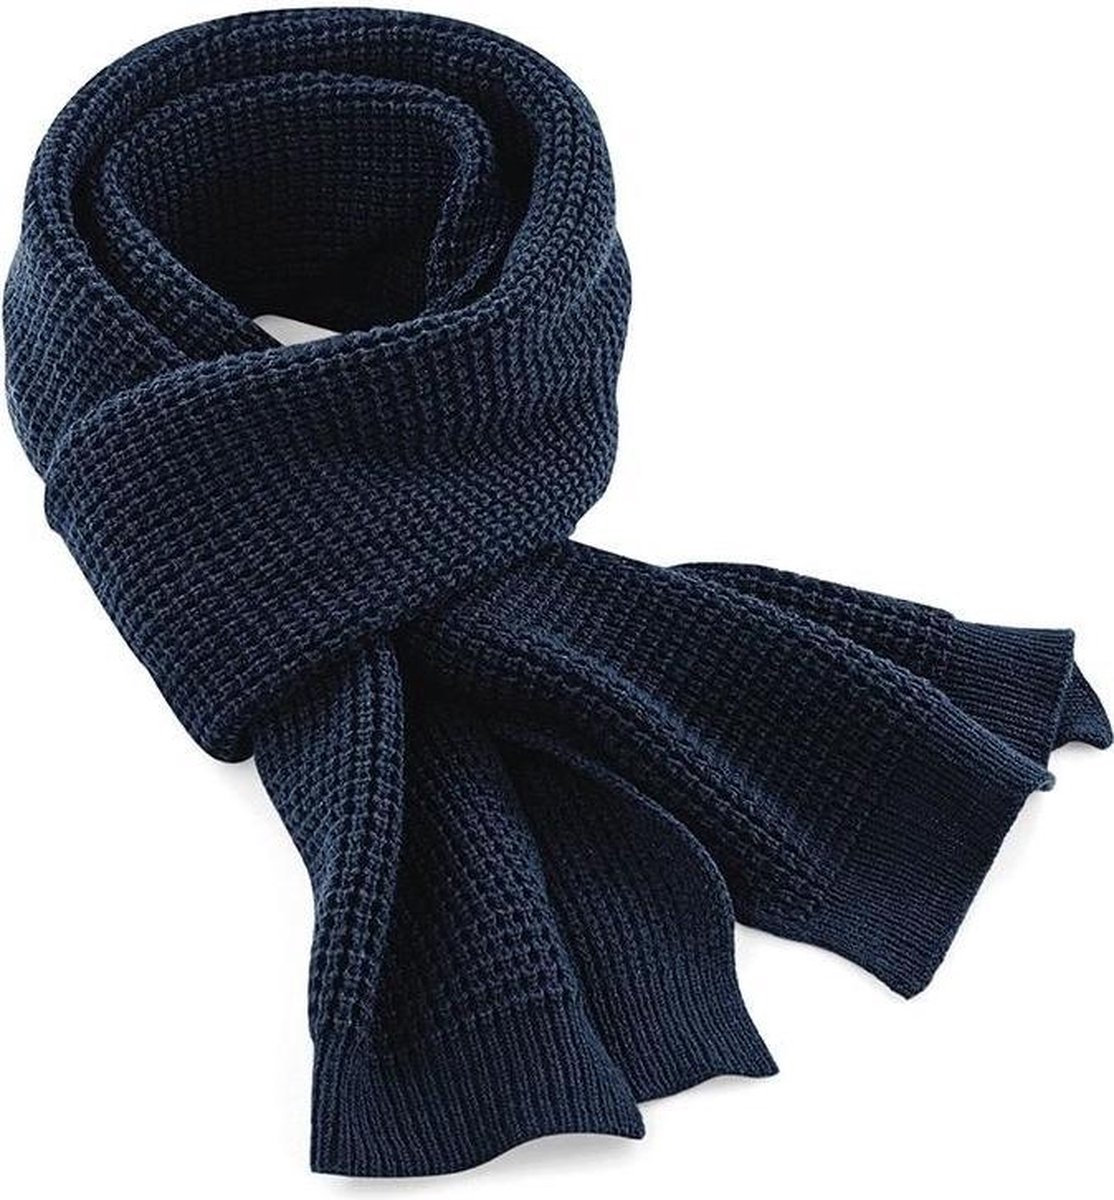 Blauwe, met dikke wafelsteek gebreide sjaal van het merk Beechfield |  bol.com